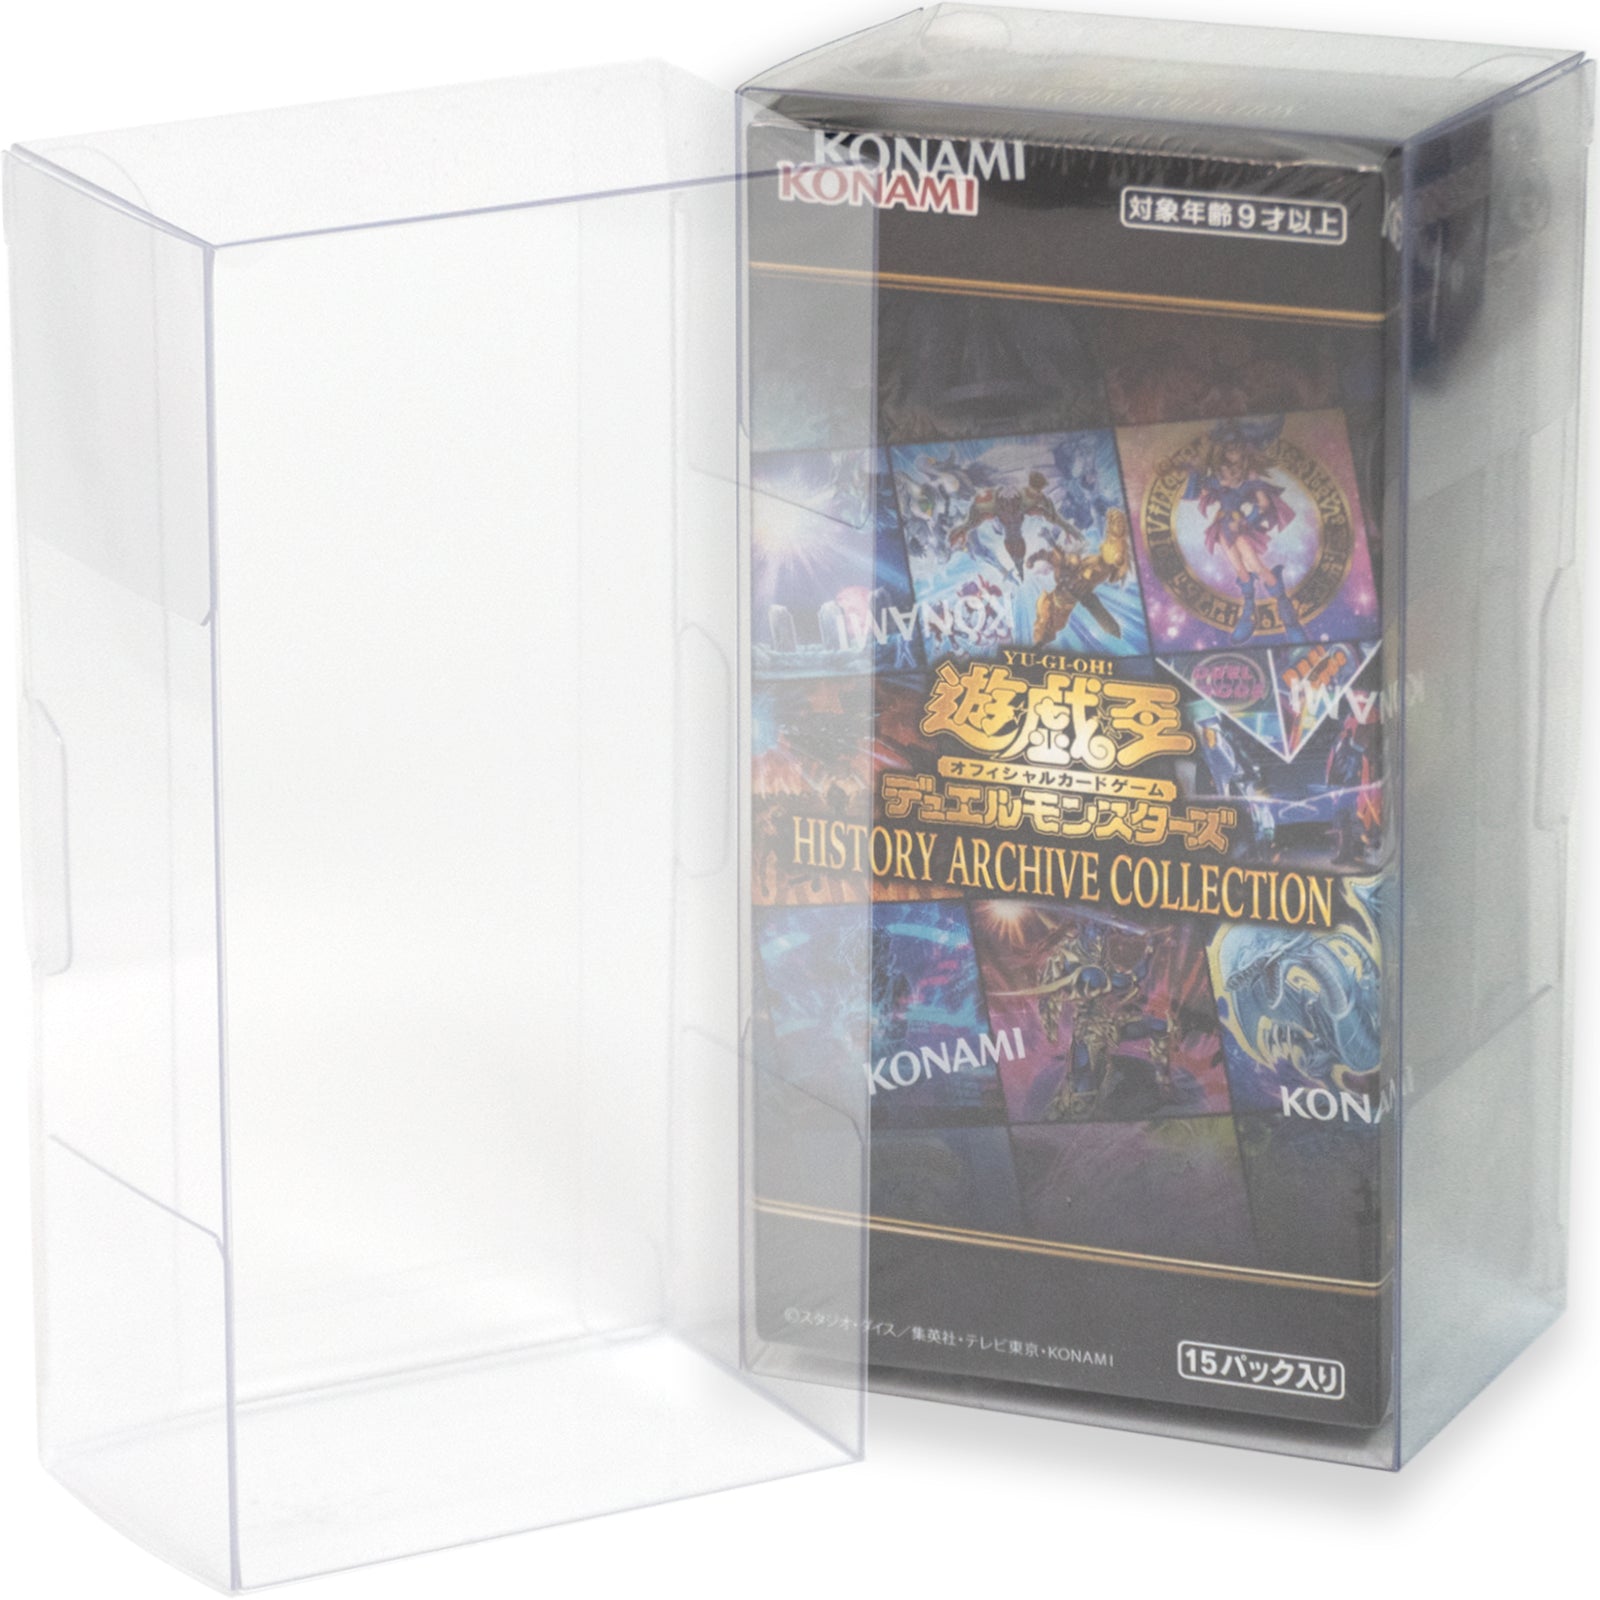 Boxx Guardian 遊戯王オフィシャルカードゲーム用 ハーフBOX サイズ